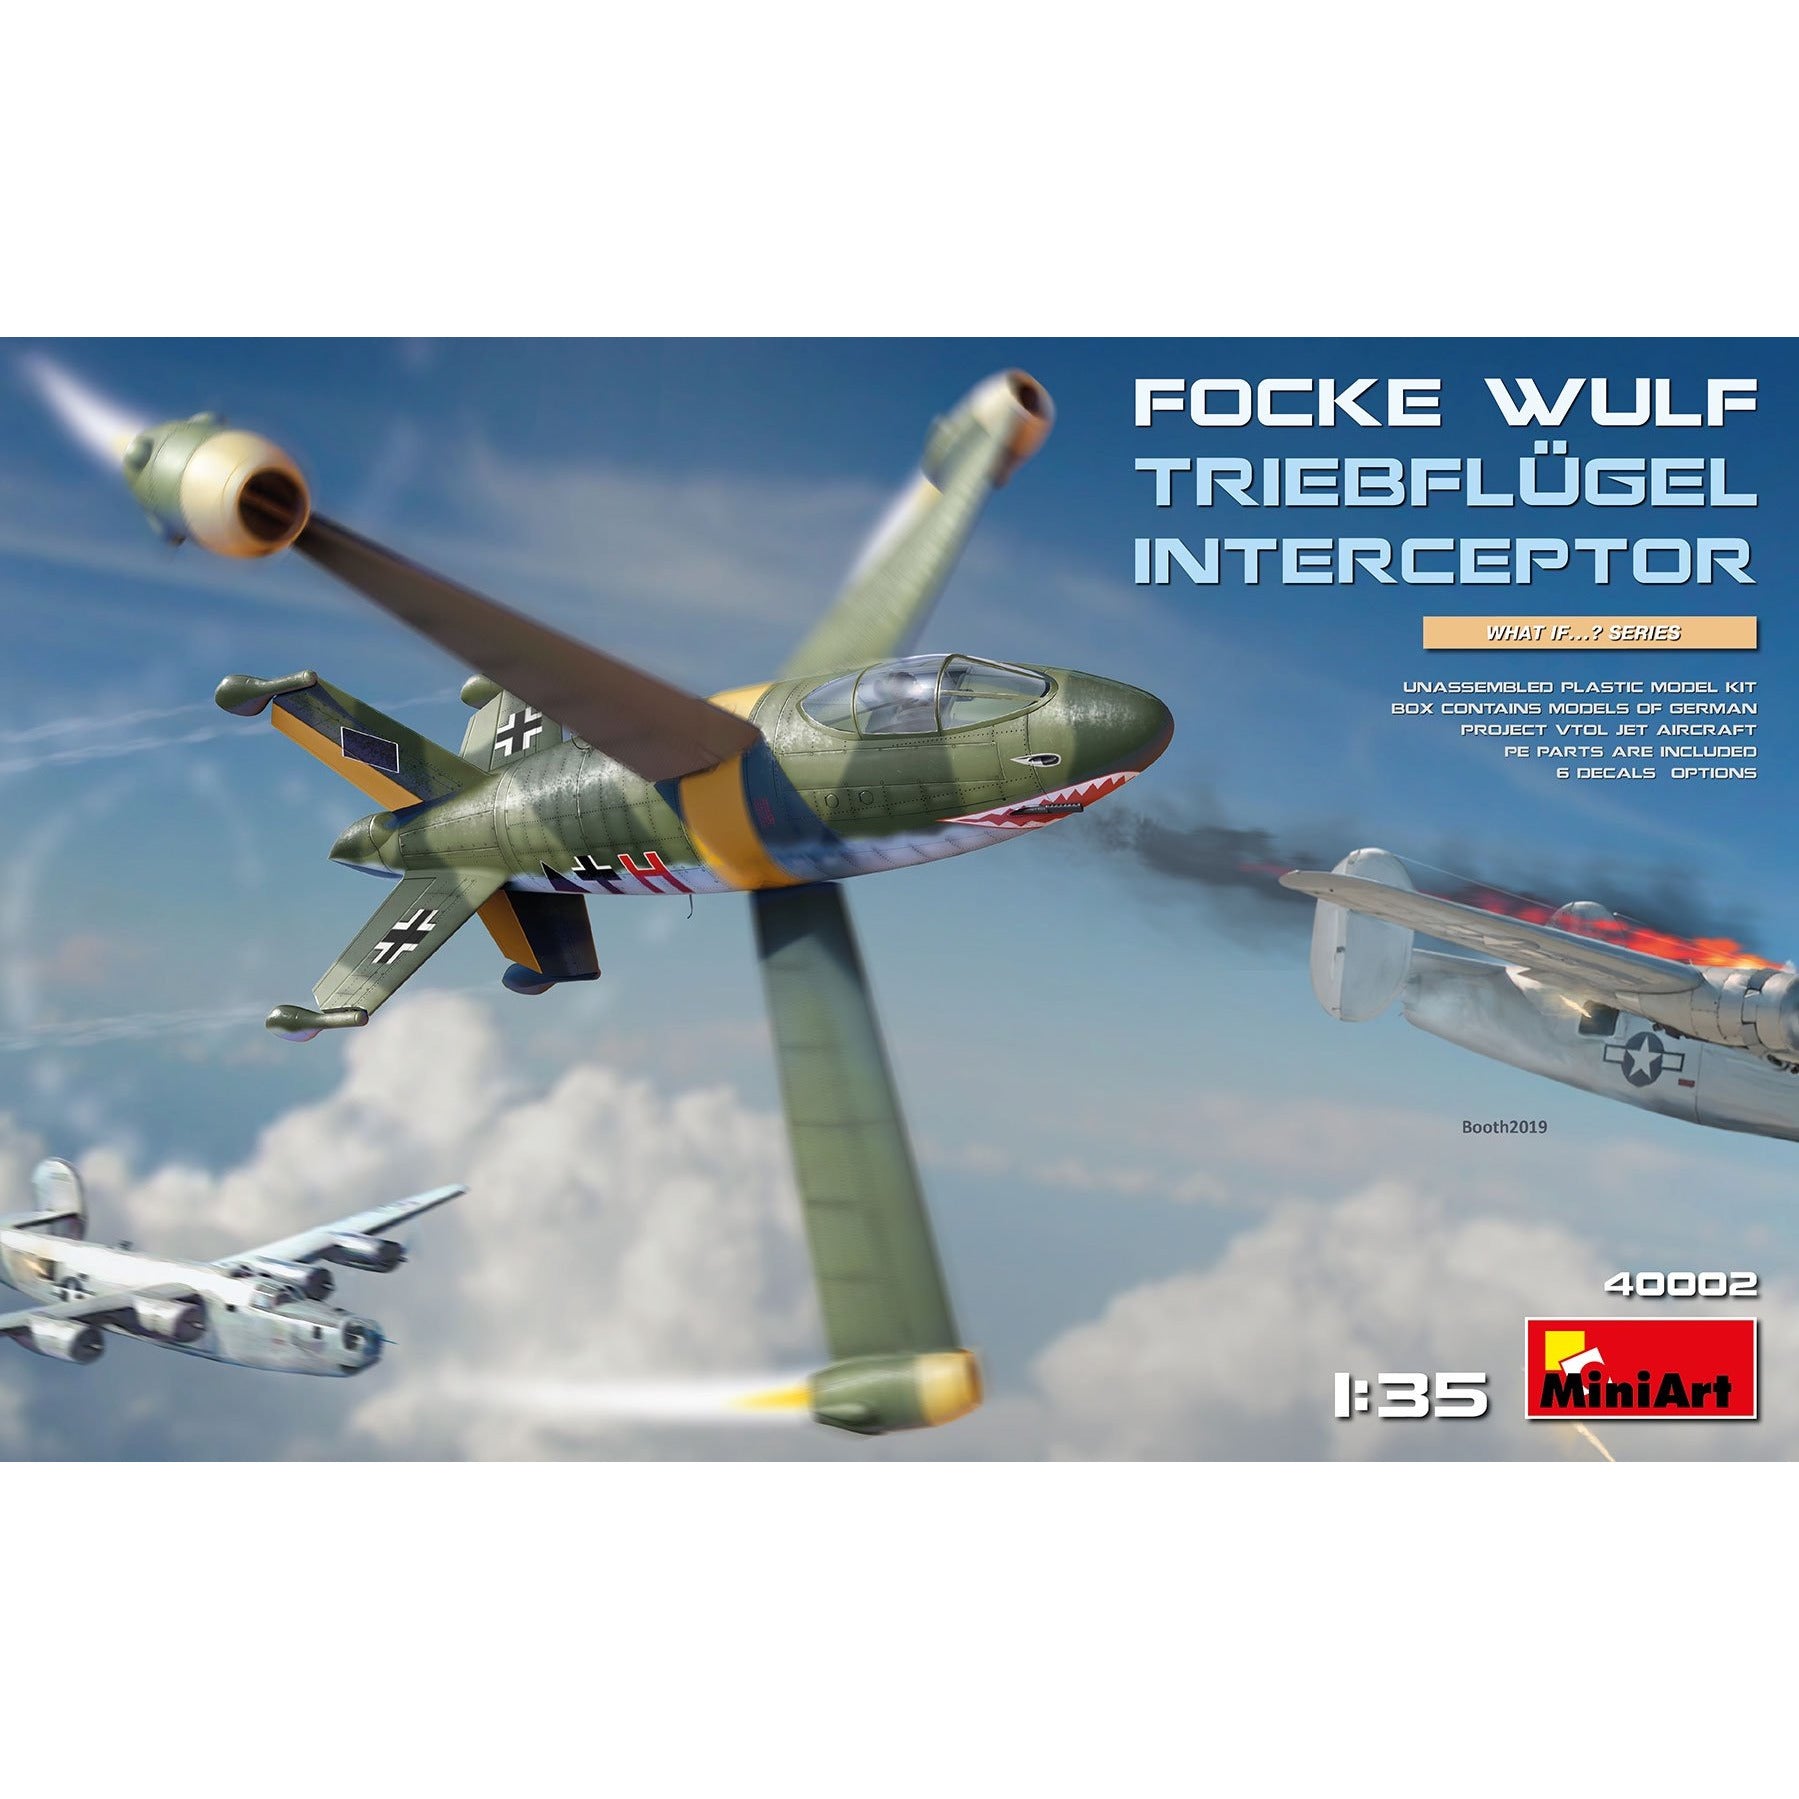 Focke-Wulf Triebflugel Interceptor 1/35 by Miniart